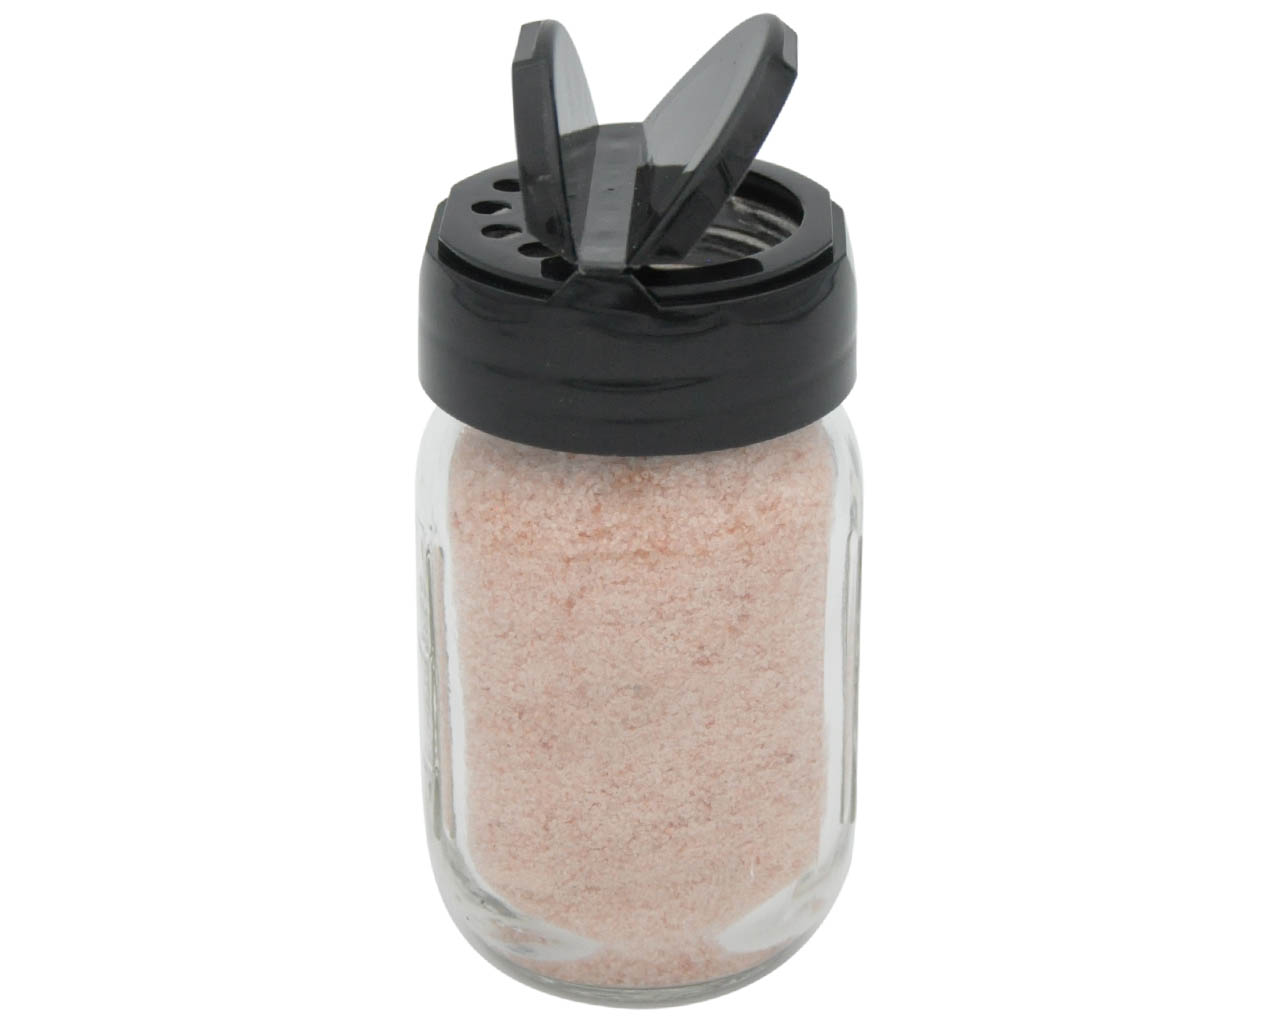 Light Pink Salt Pepper Shakers Retro Spice Jars Glass - Set of 5 